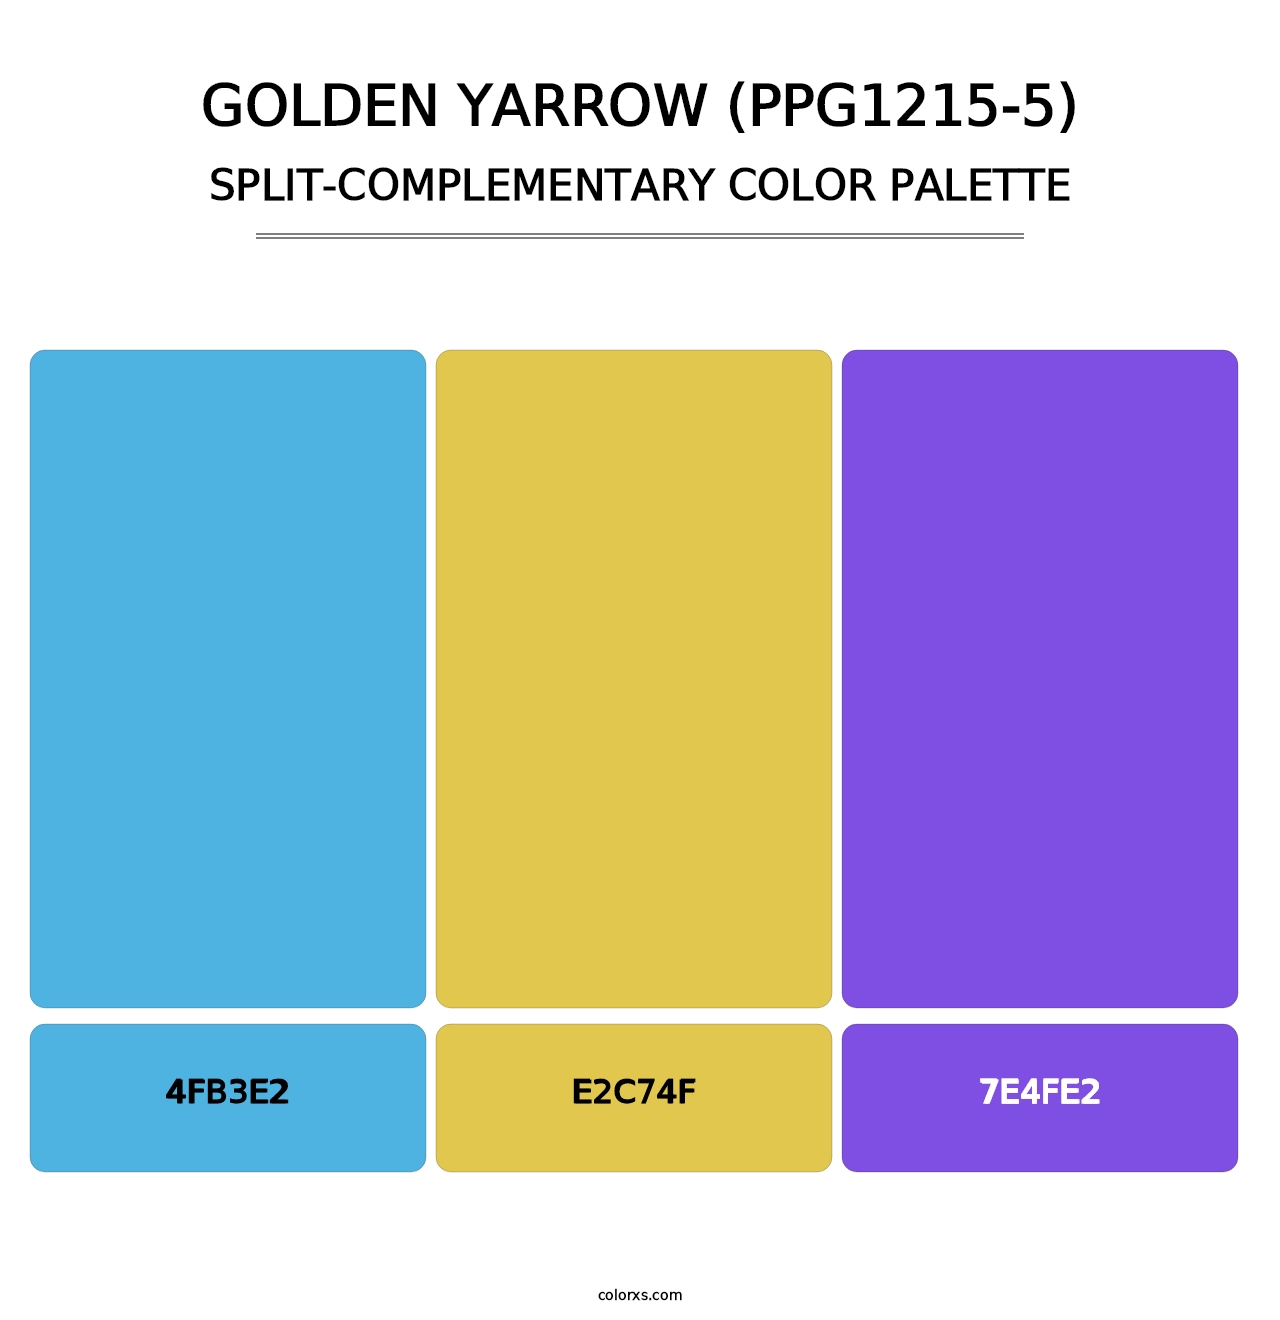 Golden Yarrow (PPG1215-5) - Split-Complementary Color Palette